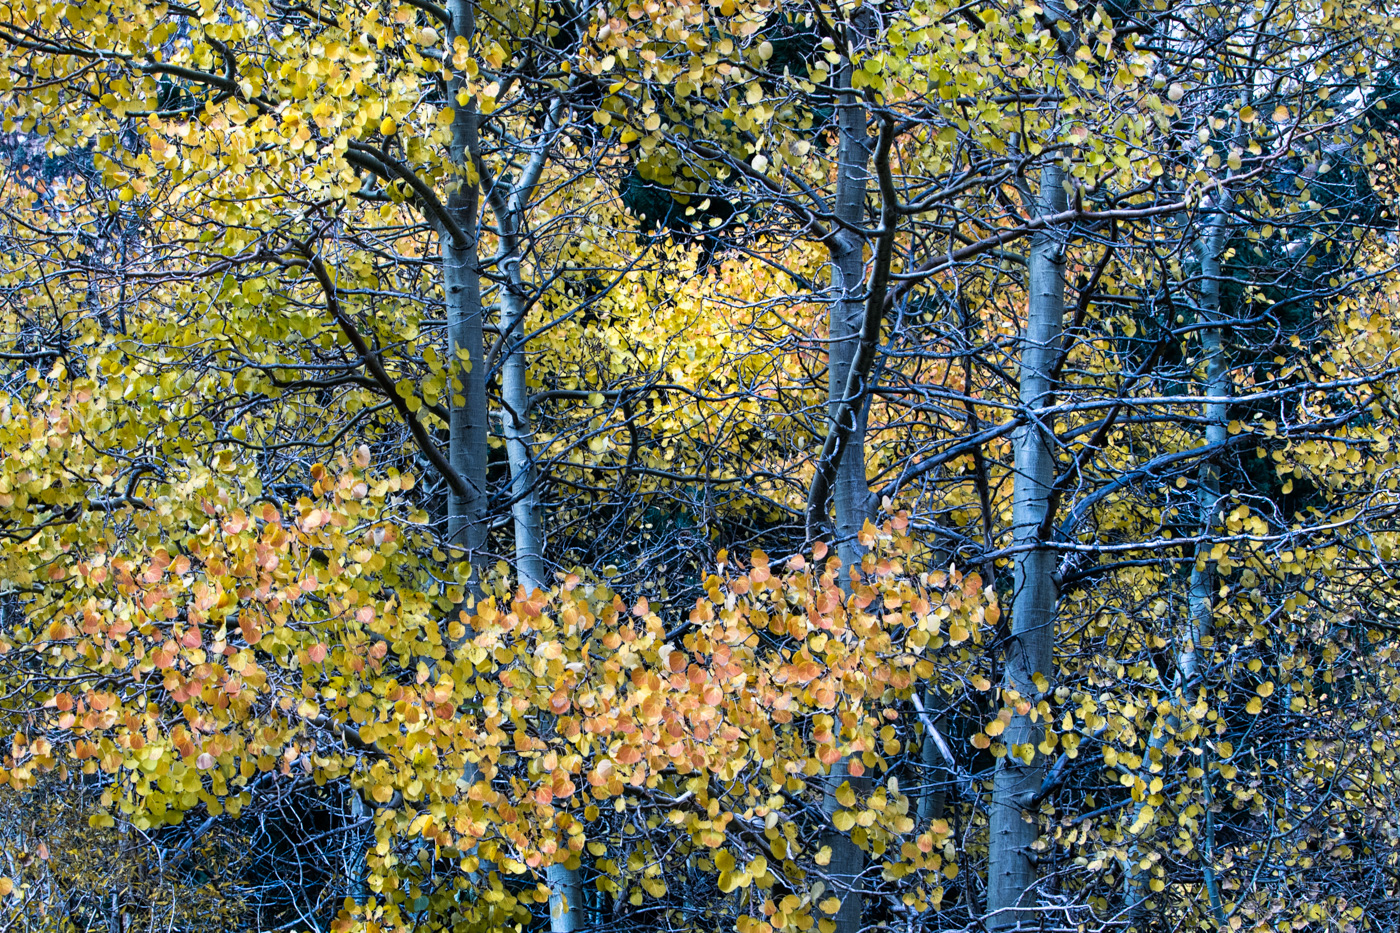 Autumn in the Eastern Sierra